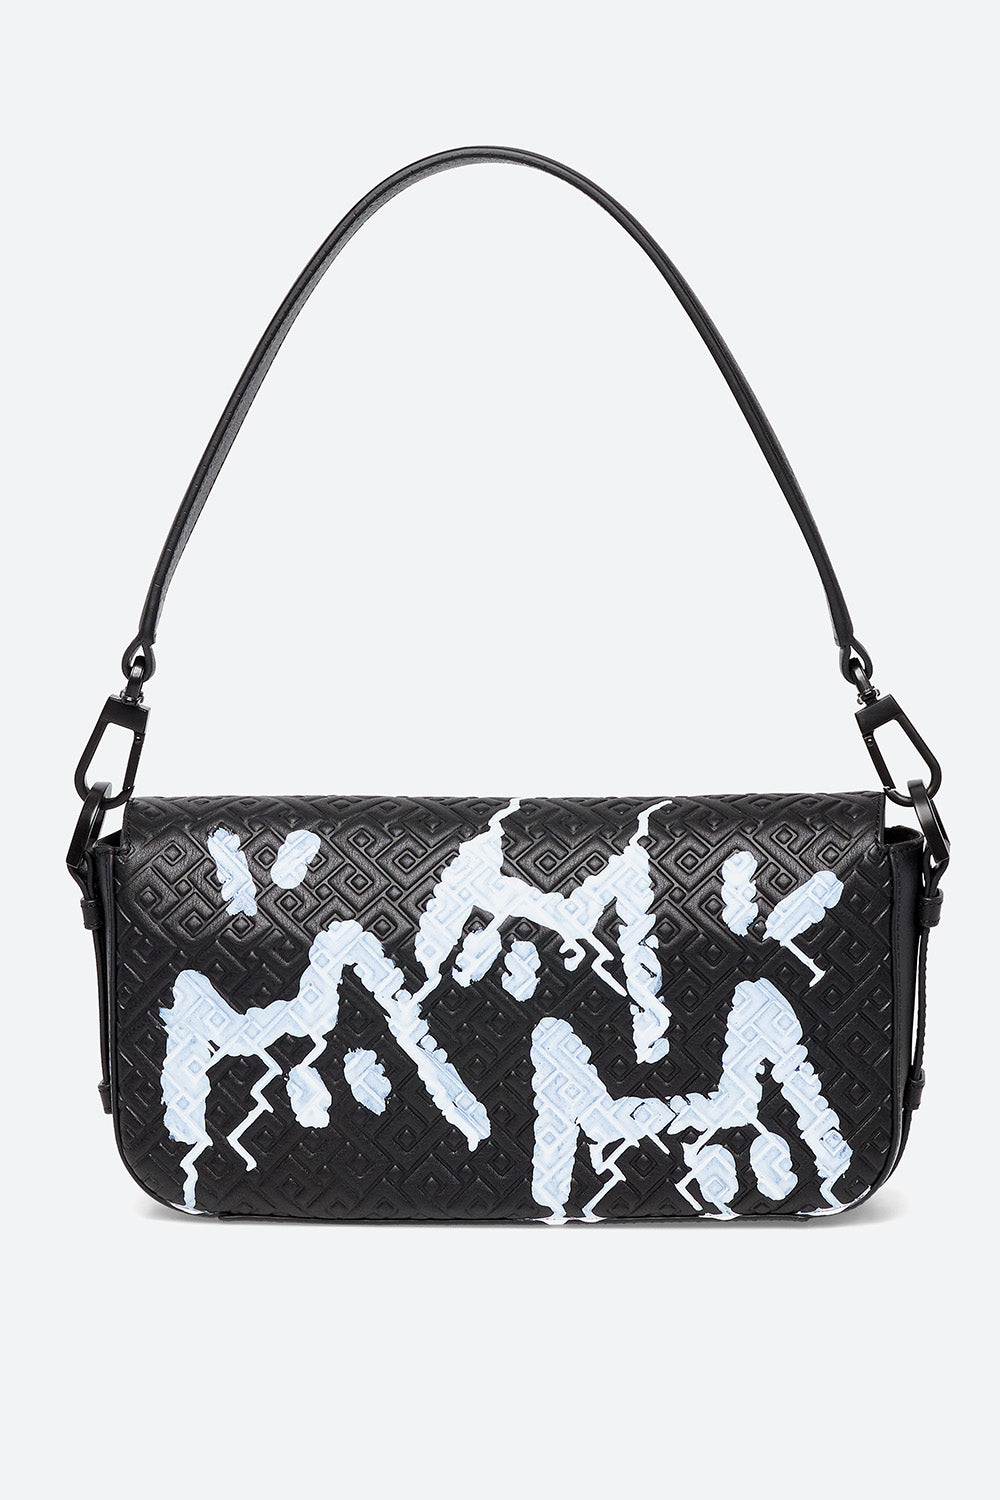 Coolman Coffeedan Series: Malvina "Cat" Handbag in Black